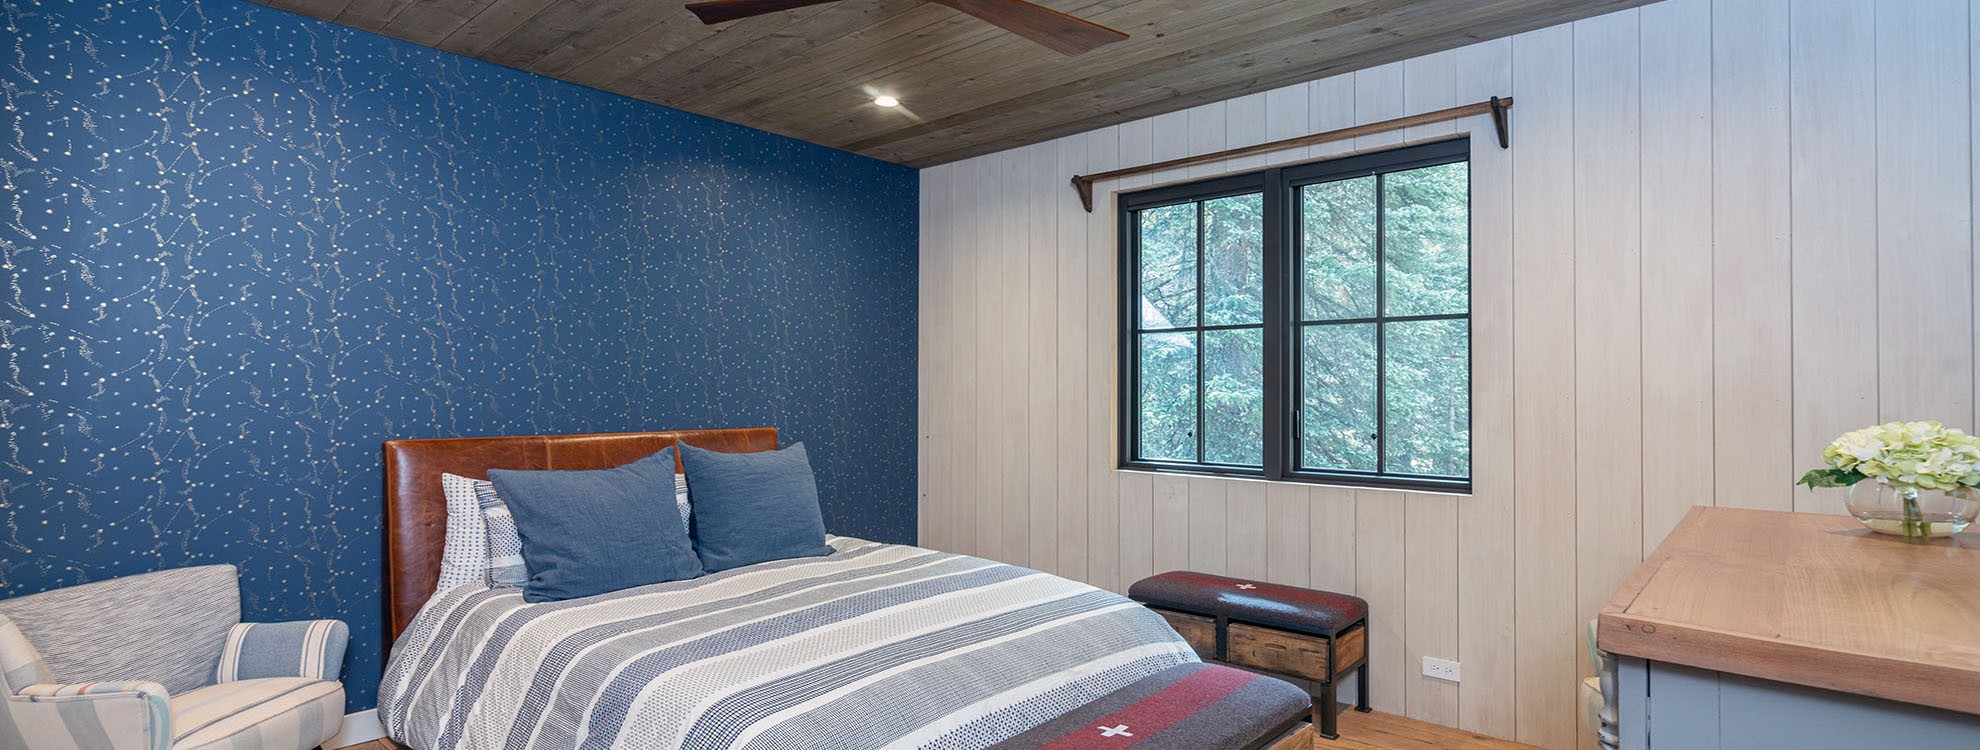 6.0-mountain-modern-rustic-mountain-village-bedroom1